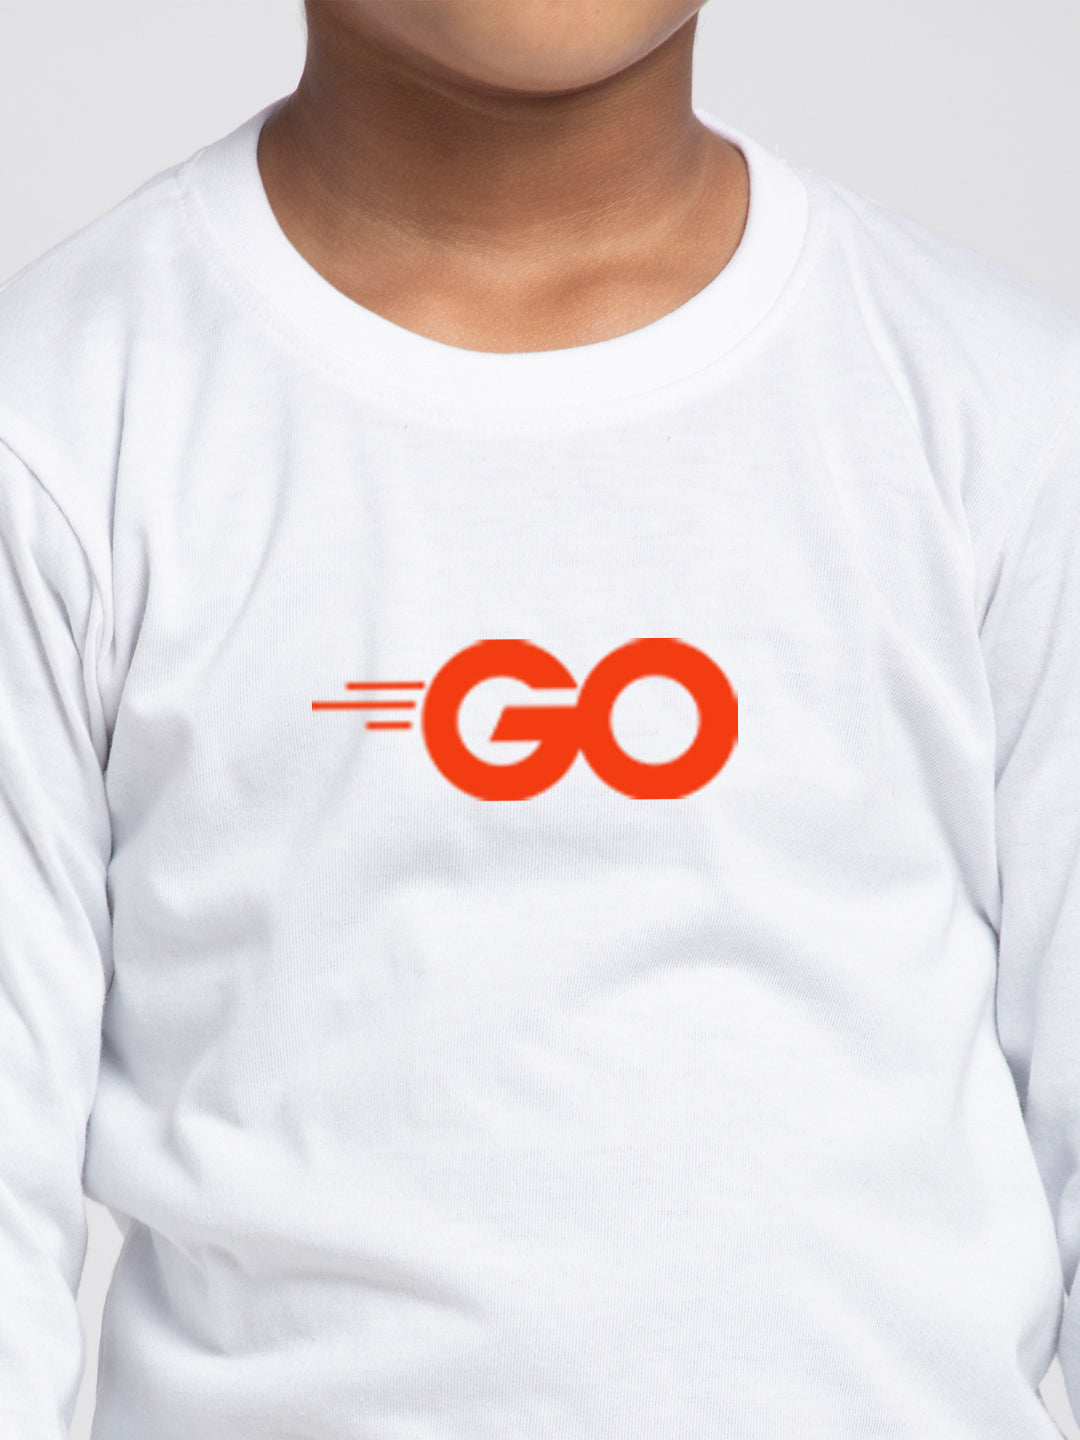 Kids Go printed full sleeves t-shirt - Friskers